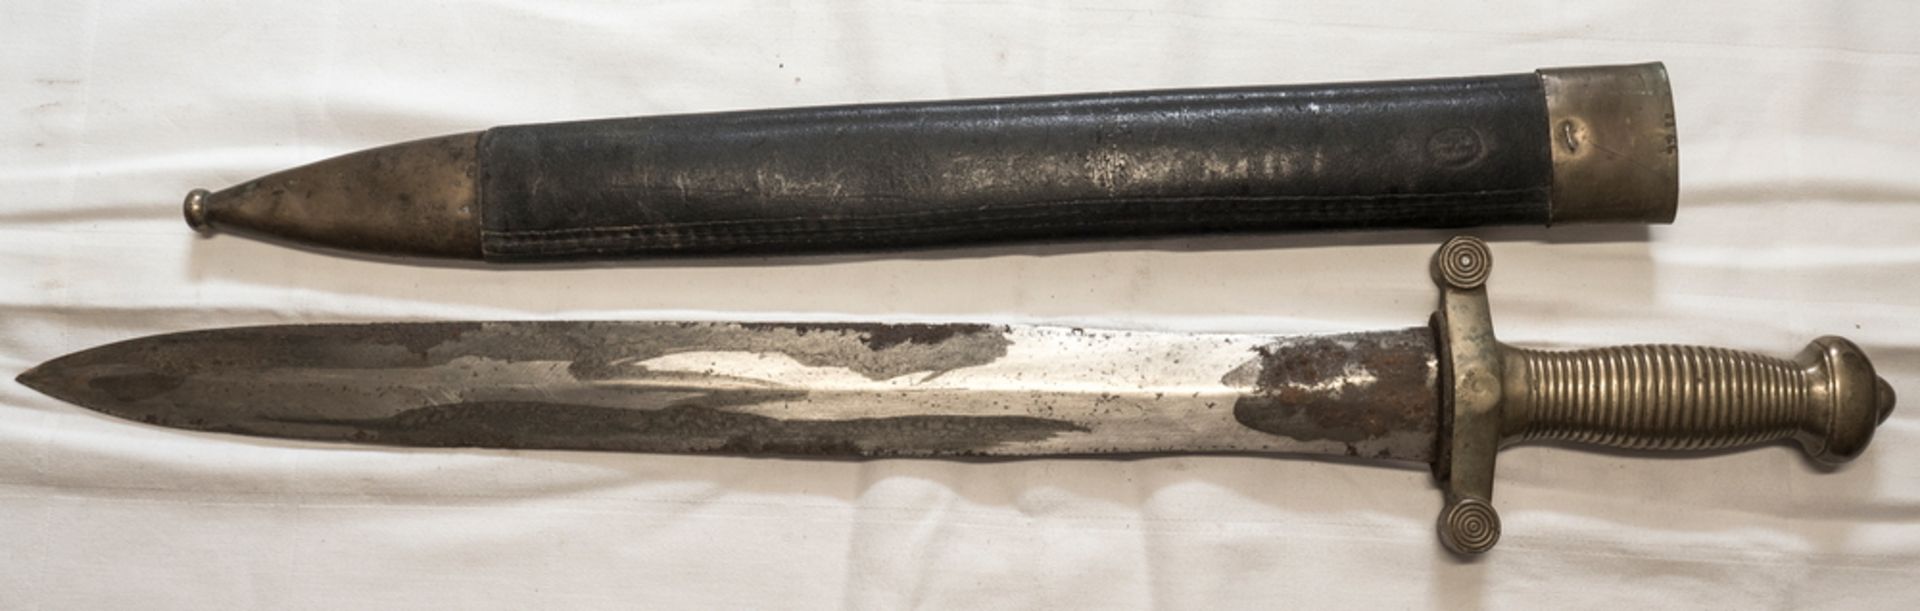 Frankreich Artillerie - Kurzschwert. Klingenlänge: ca. 48 cm, Klingenbreite: ca. 4,5 cm, - Image 2 of 5